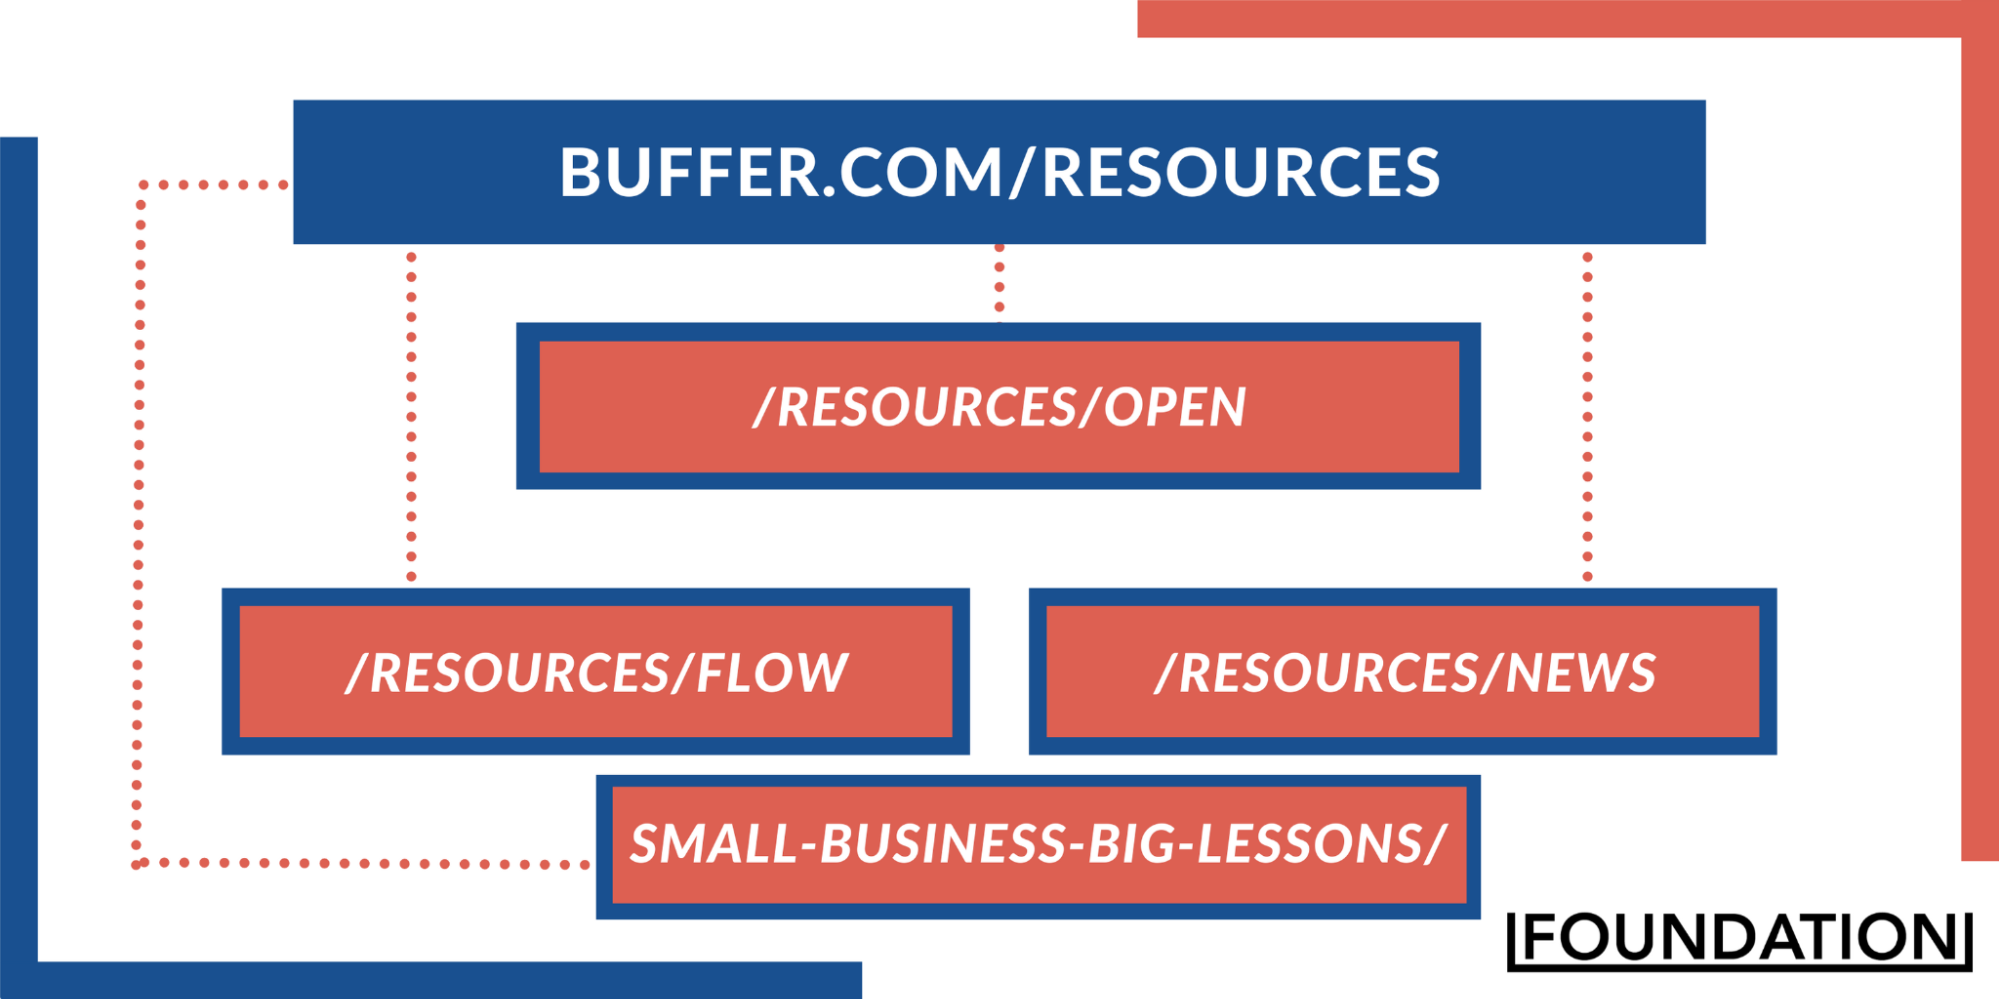 Buffer.com/resources site architecture